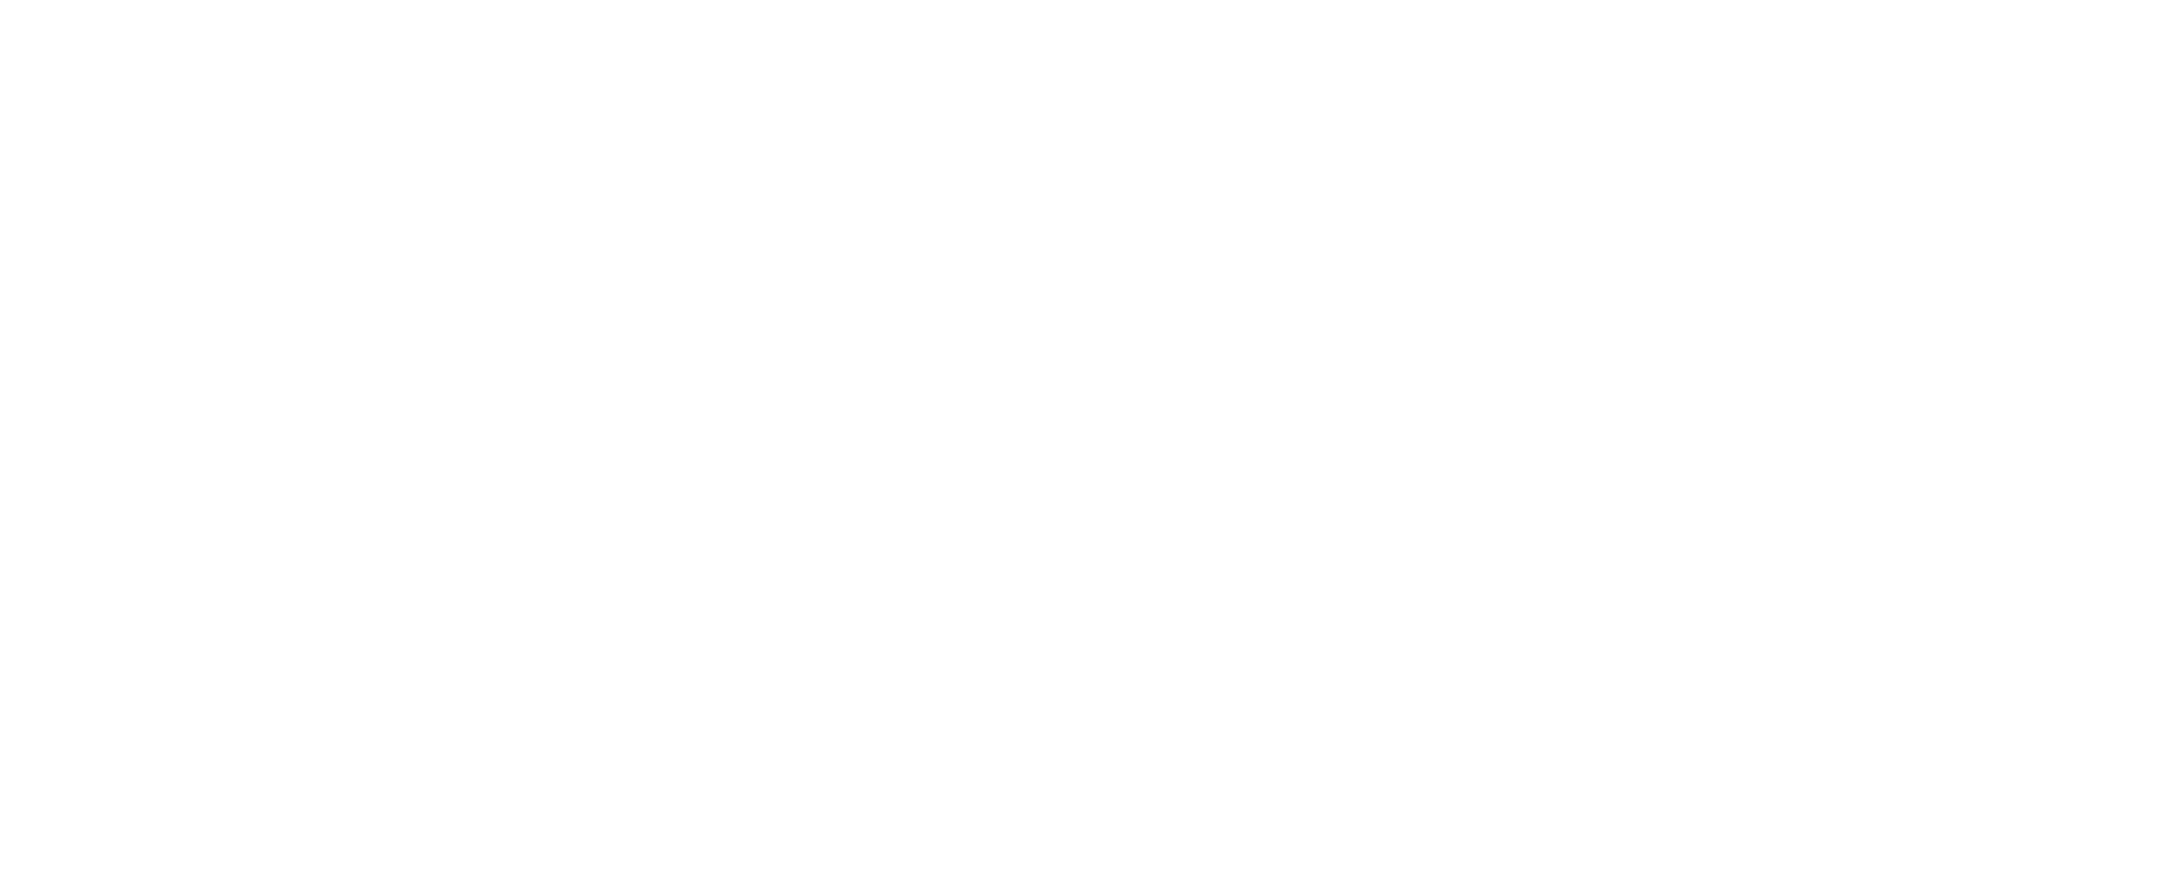 People's Choice Awards logo